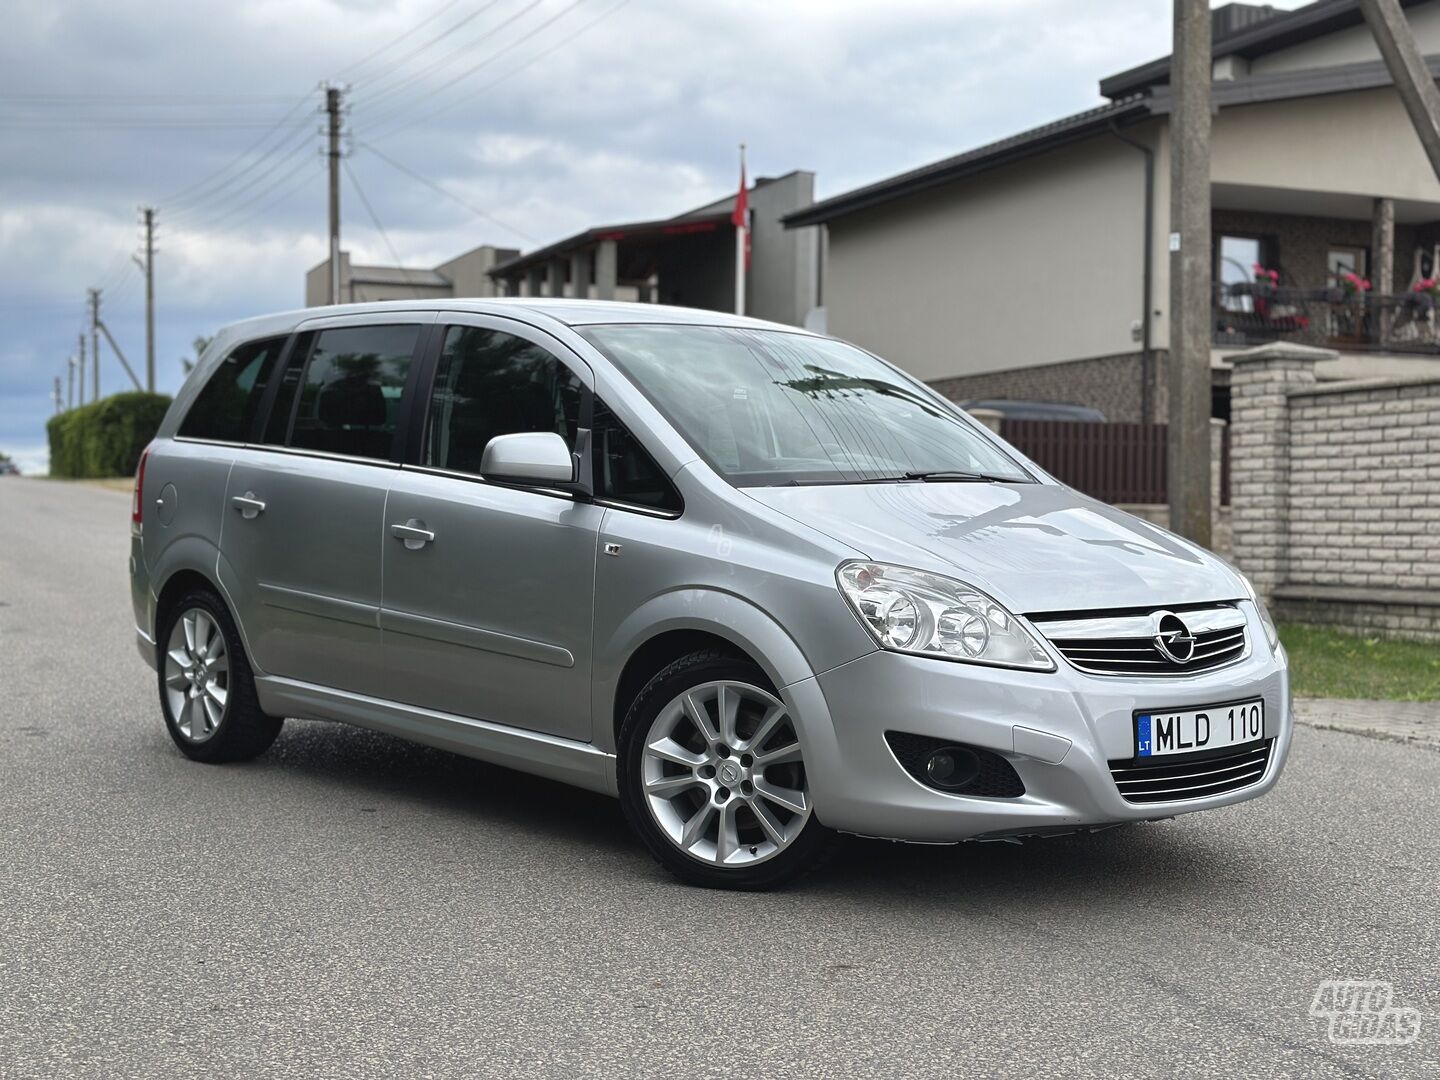 Opel Zafira B CDTI 111 2010 г